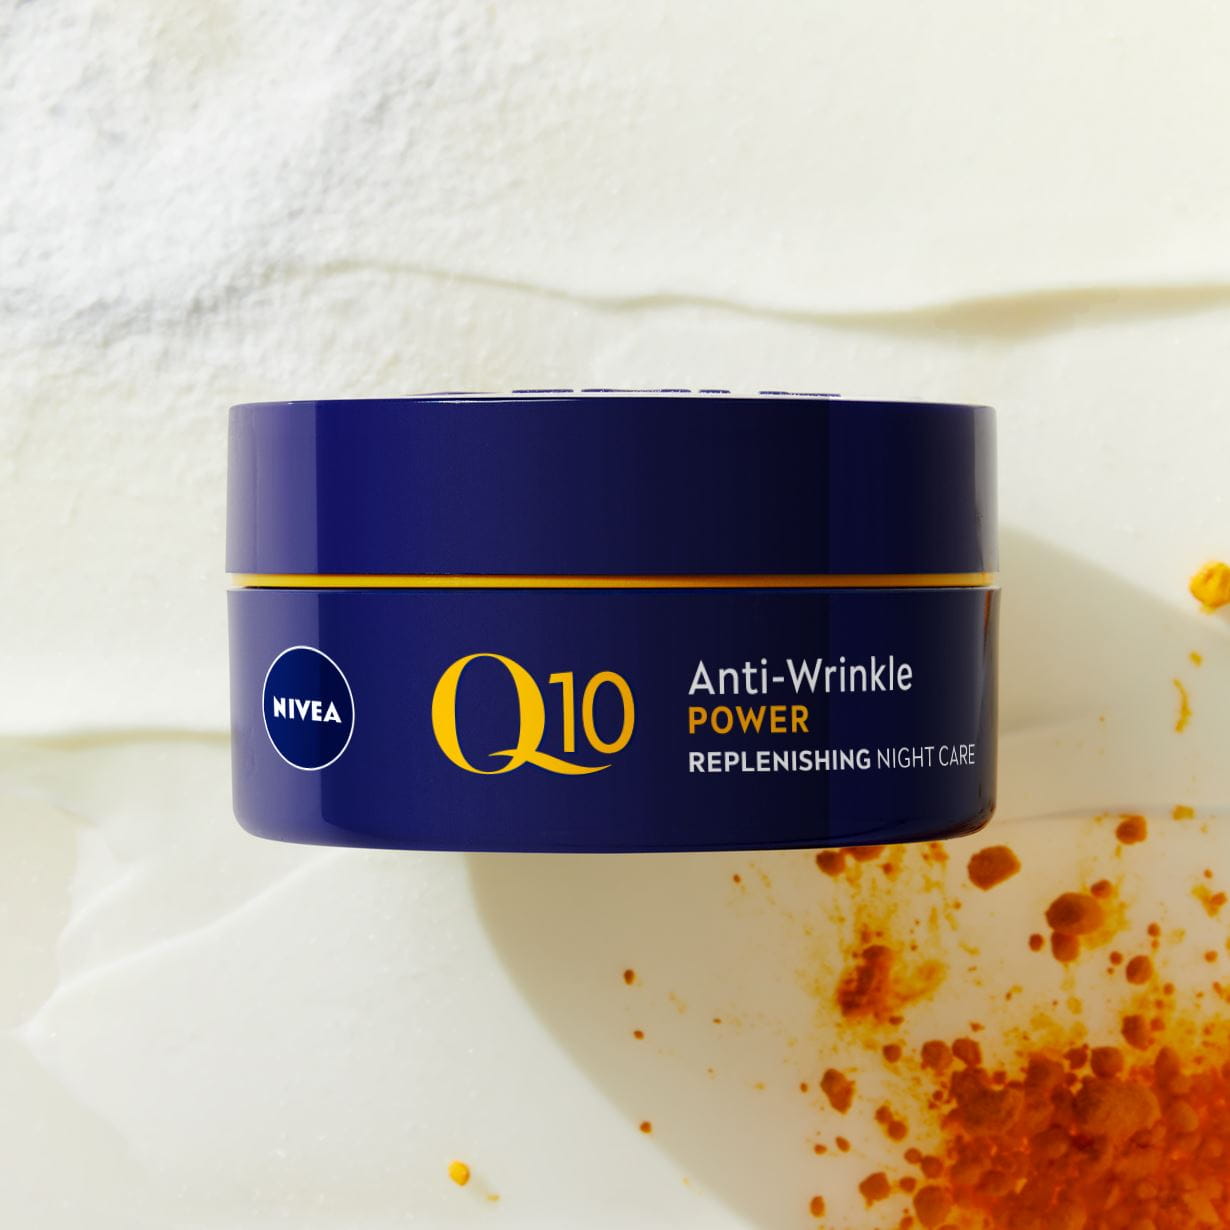  NIVEA Q10 Anti-Wrinkle Power Replenishing Night Cream